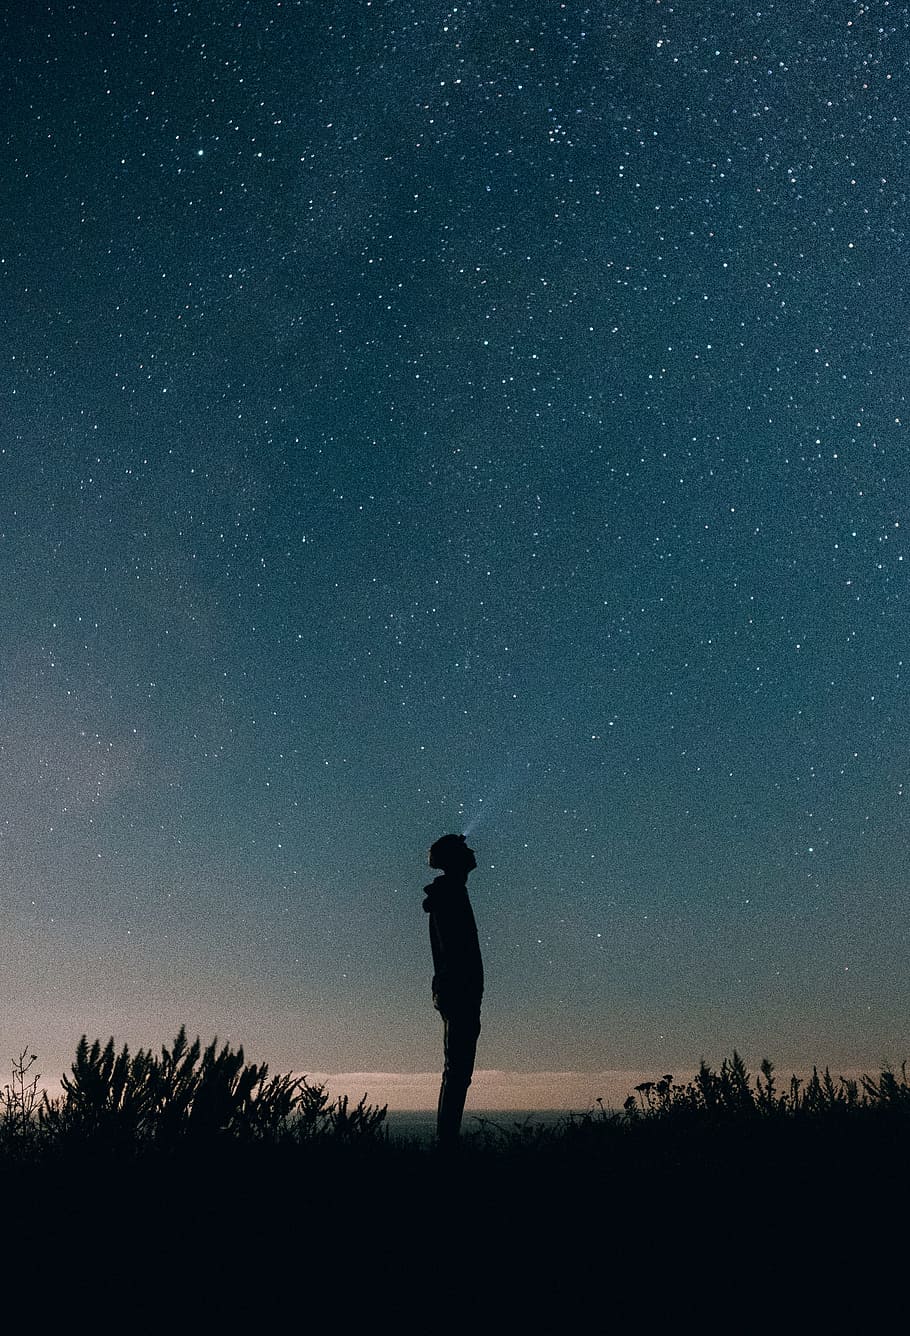 silhouette of person between grass under black sky, star, headlamp